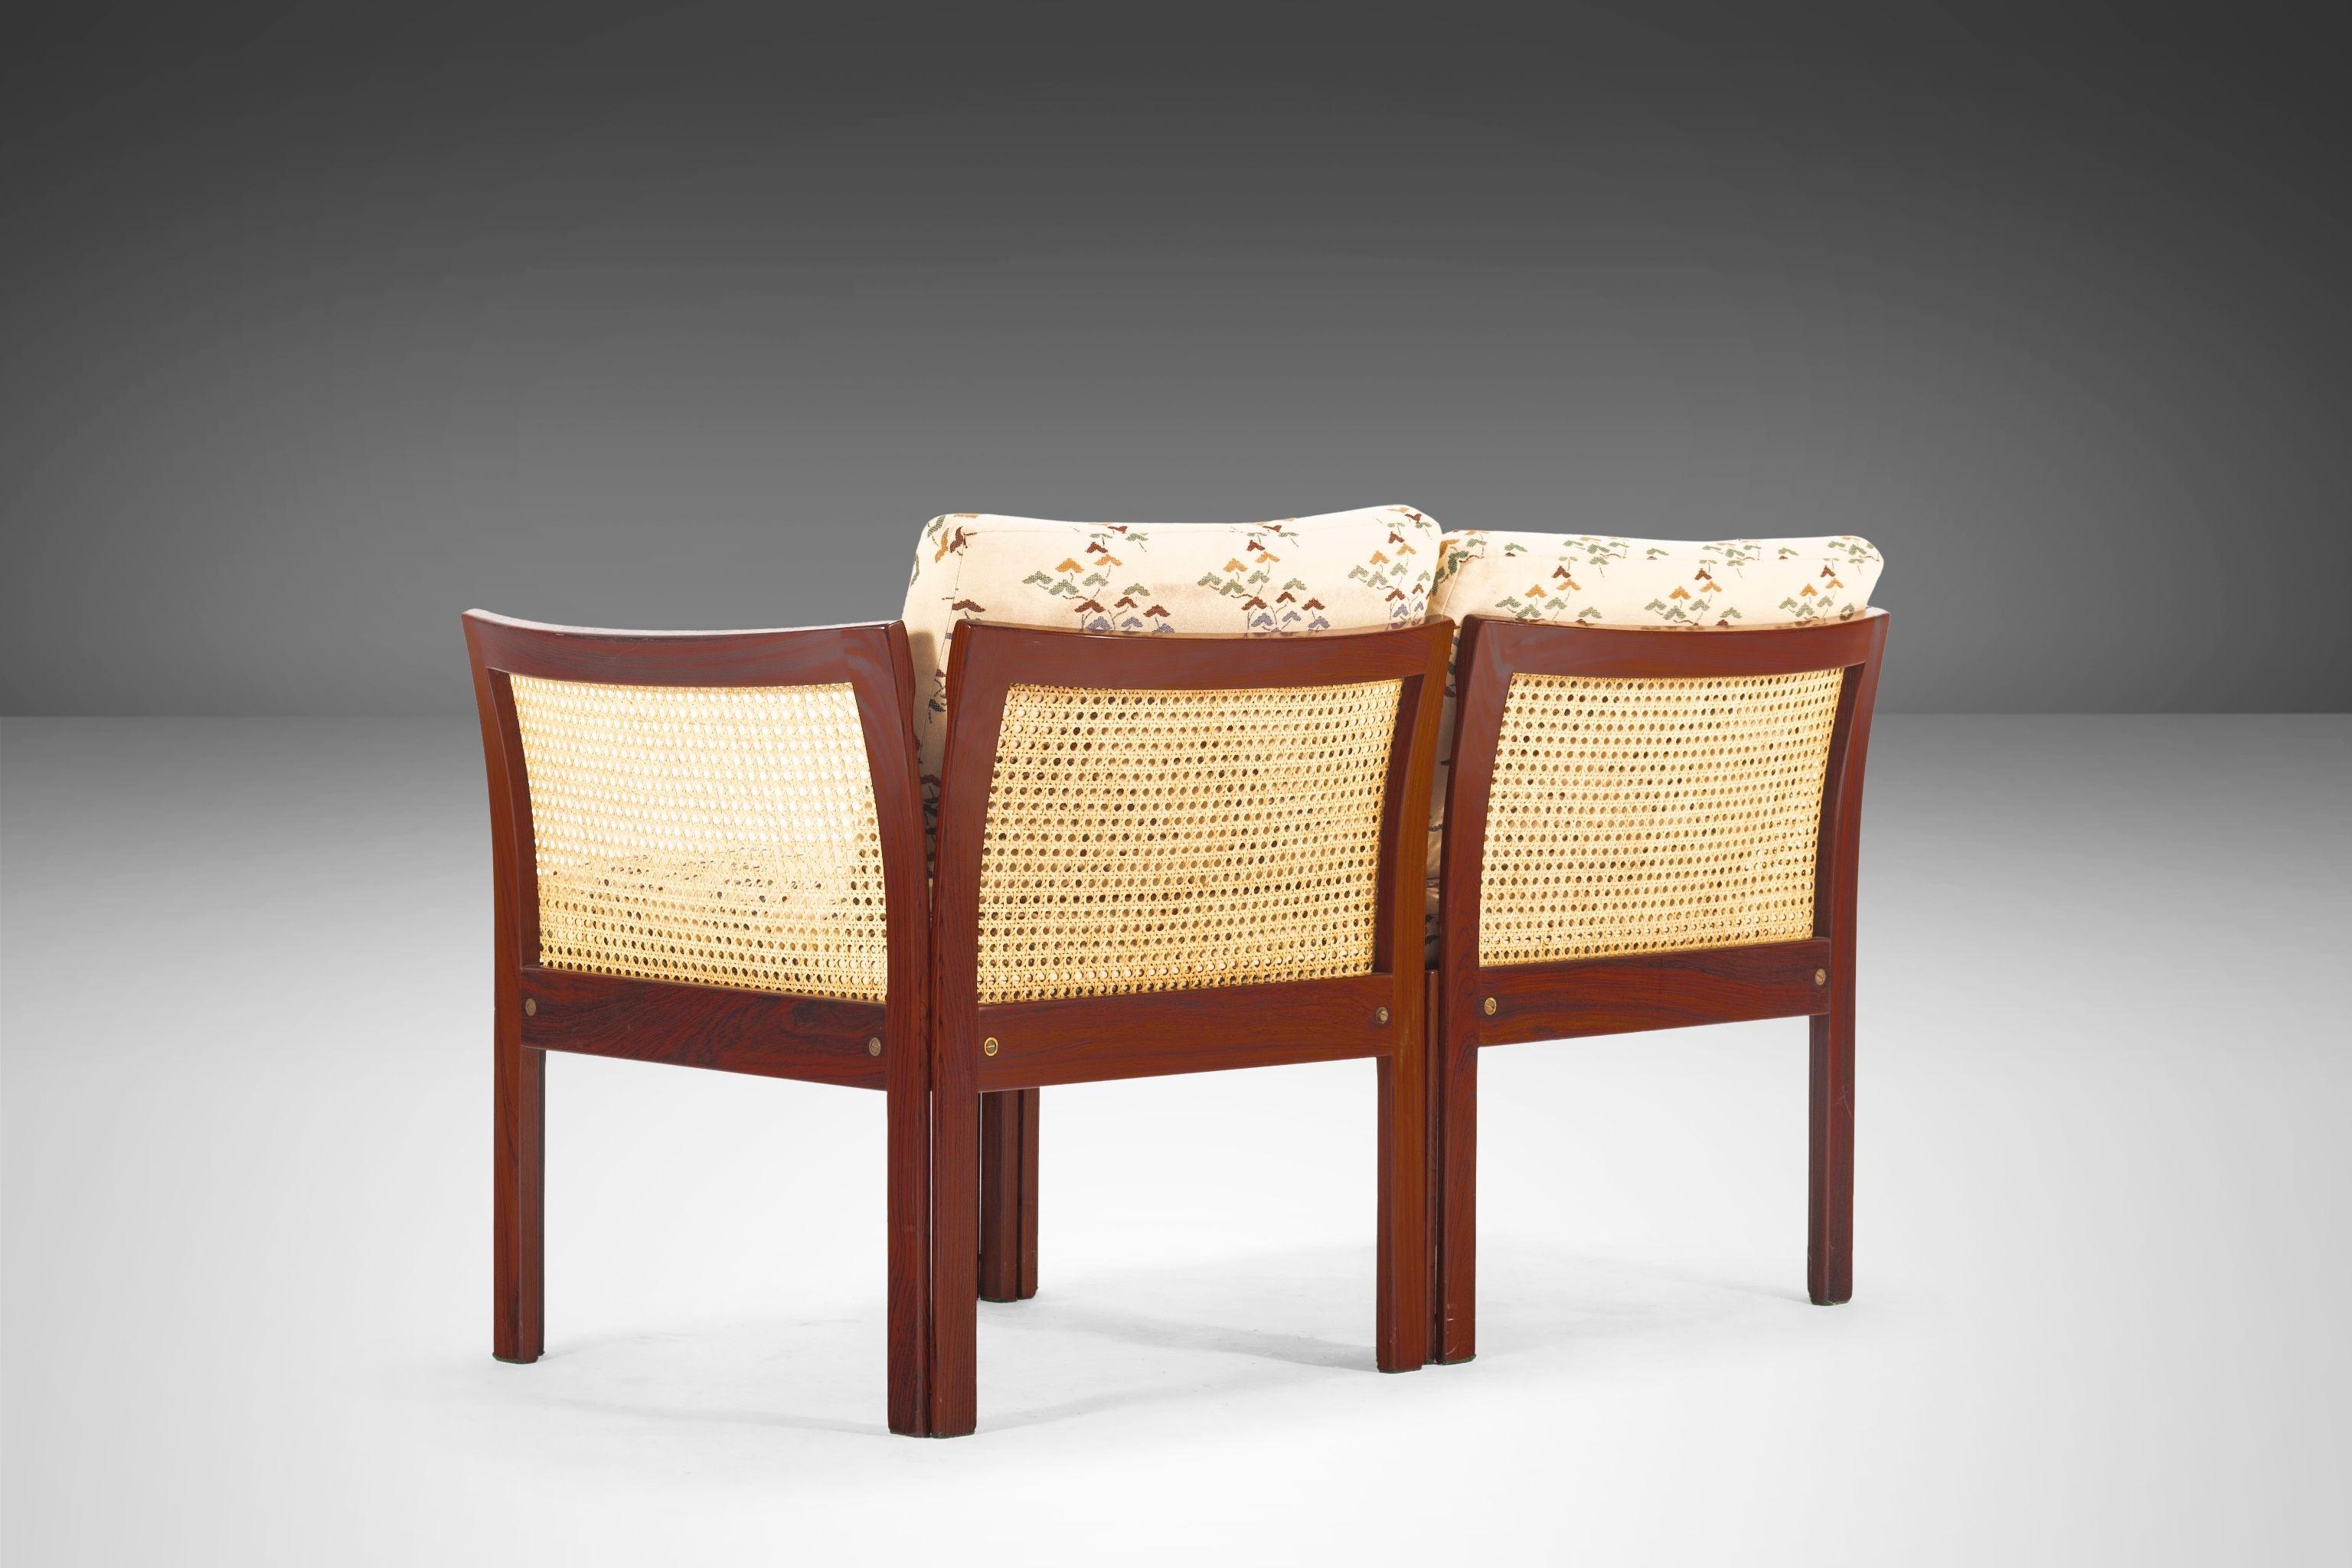 Danois Soborg Rosewood & Cane Plexus Modular Two Seat Sofa / Chairs by Illum Wikkelsø en vente